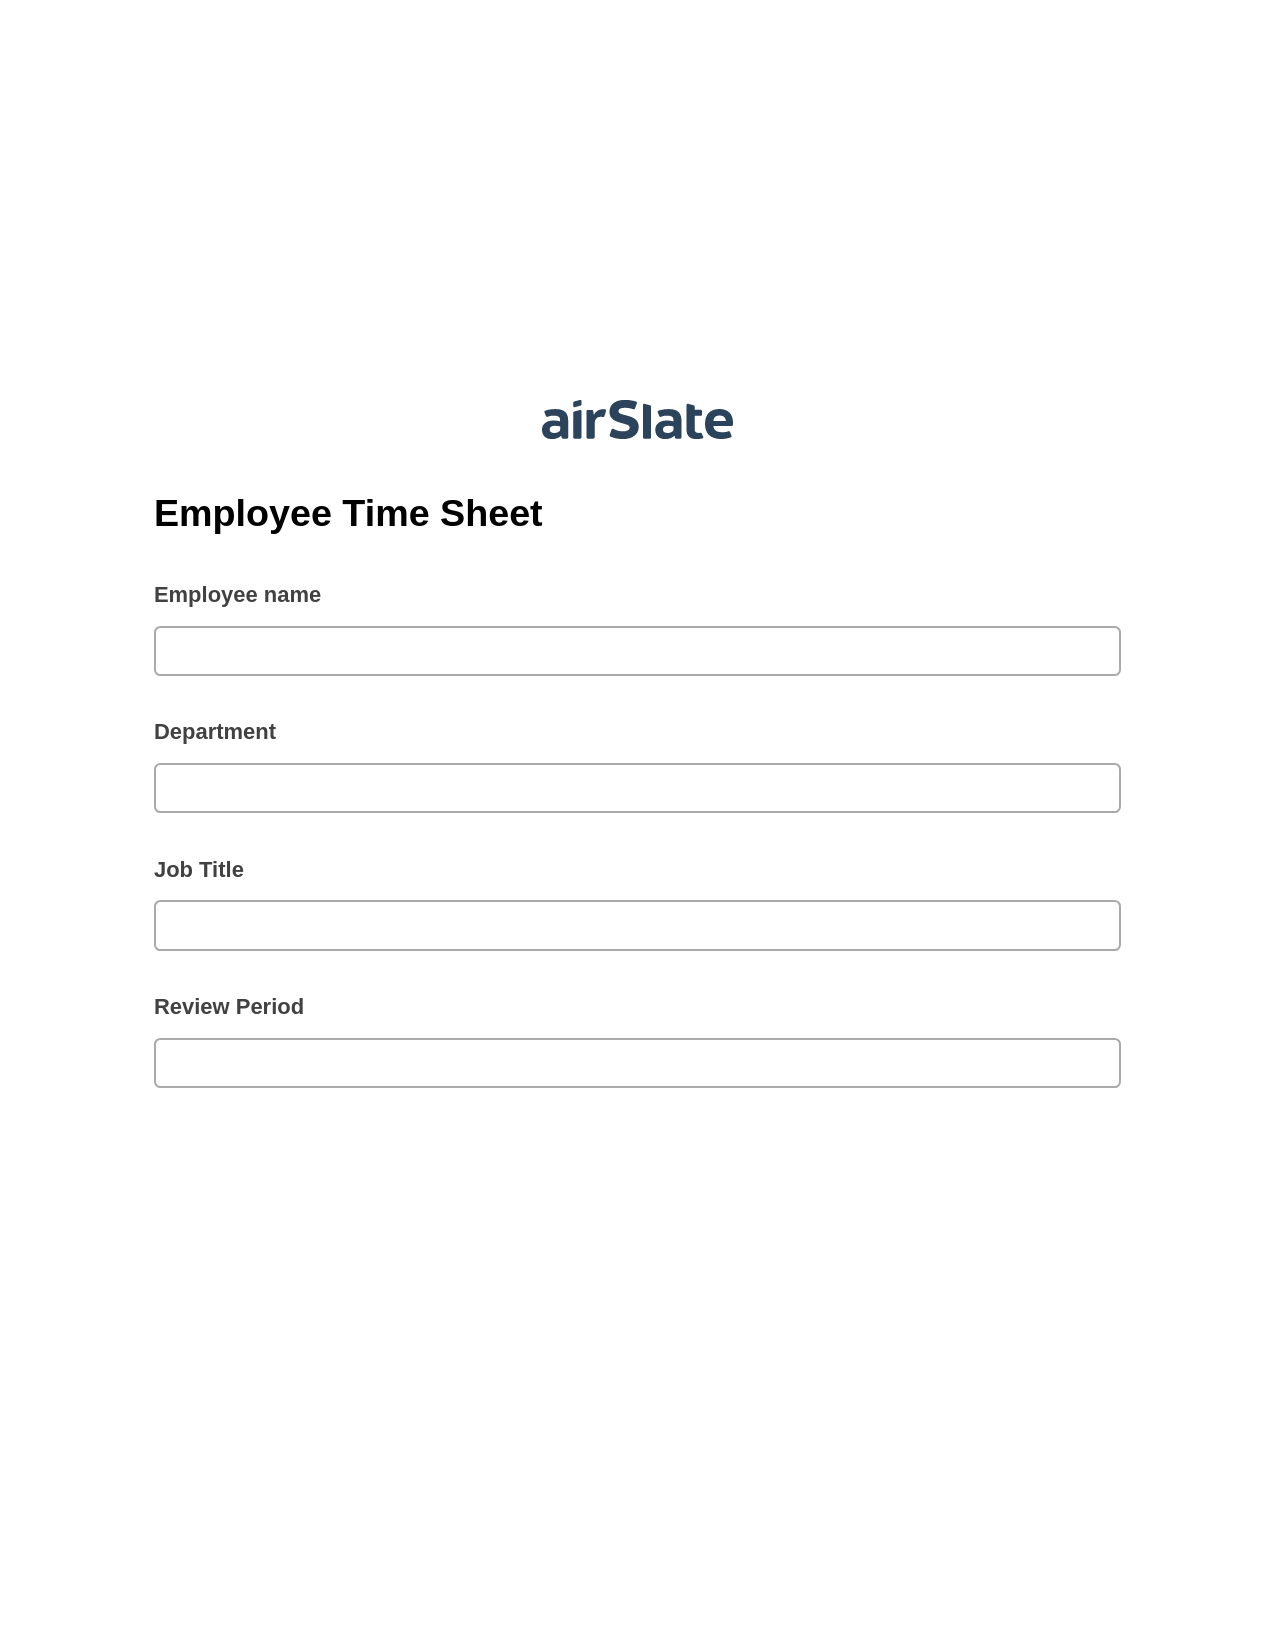 Multirole Employee Time Sheet Pre-fill from Salesforce Records Bot, Create Salesforce Records Bot, Webhook Postfinish Bot